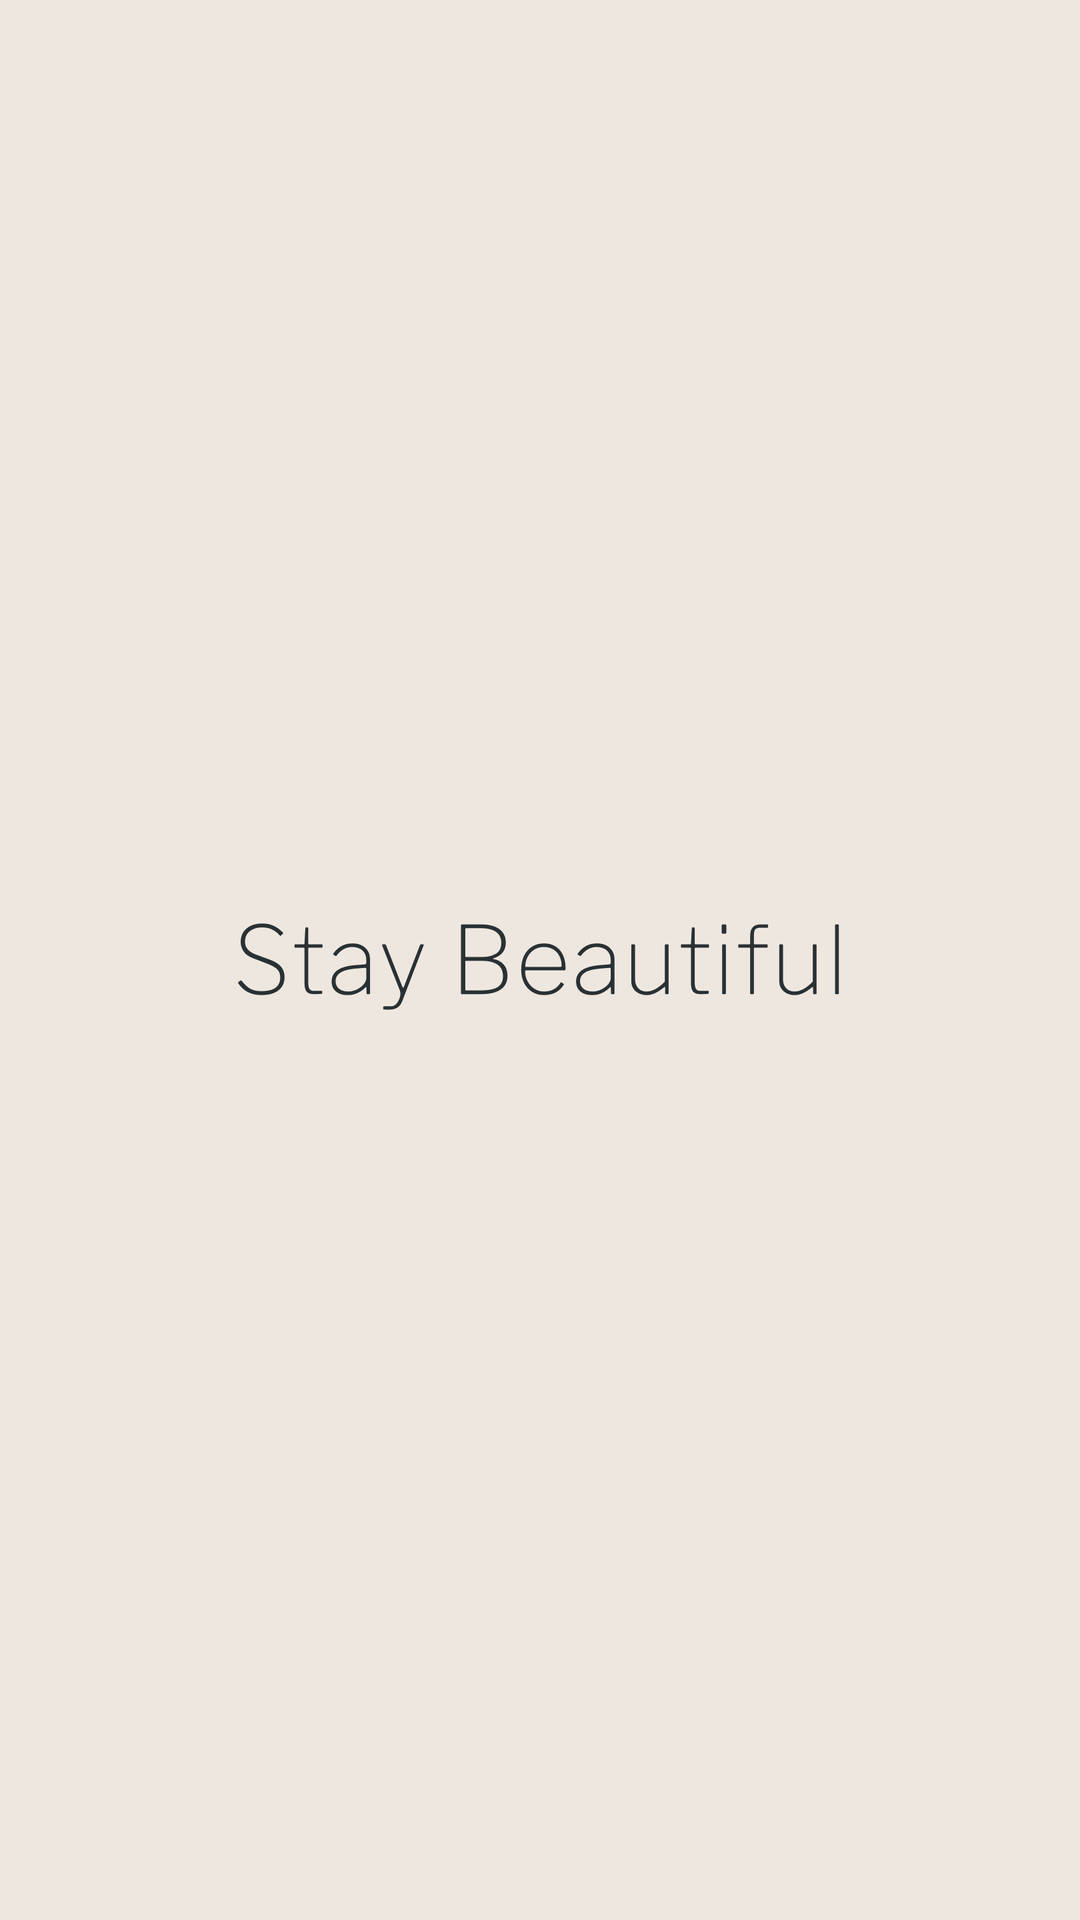 Stay Beautiful Motivational Phrase Background